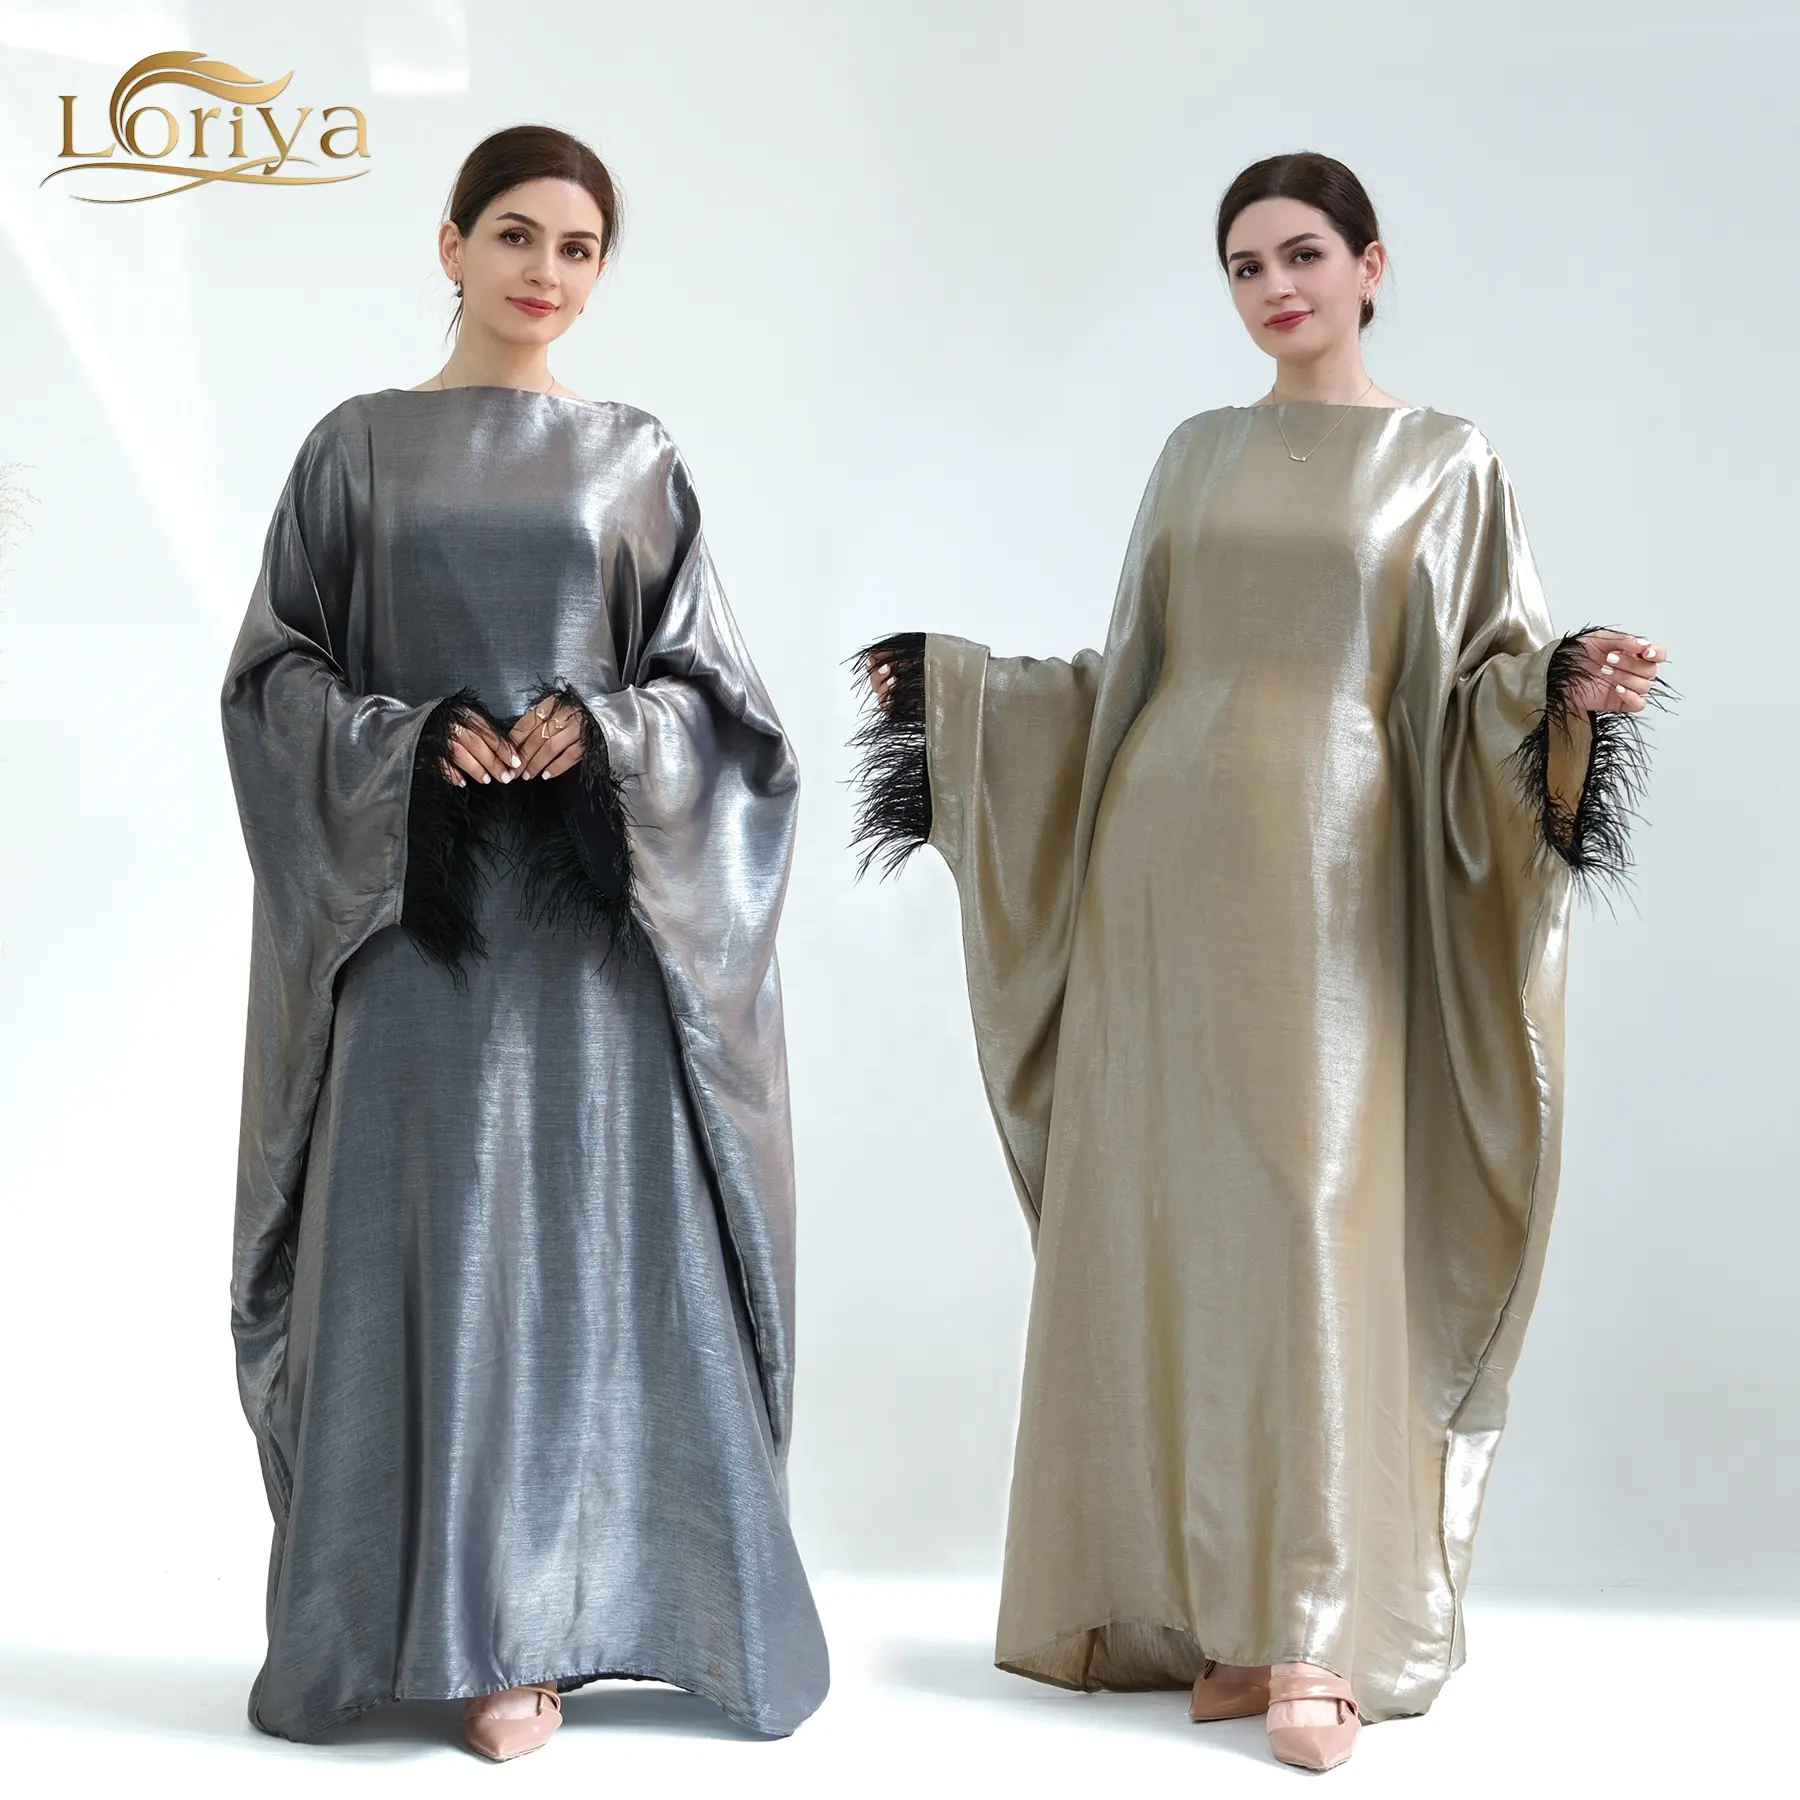 Loriya Islamic Clothing Feather Geschlossen Abayas Frauen Muslim Kleid Türkei Dubai Abaya Modest Kleid mit Inside Tie Belt